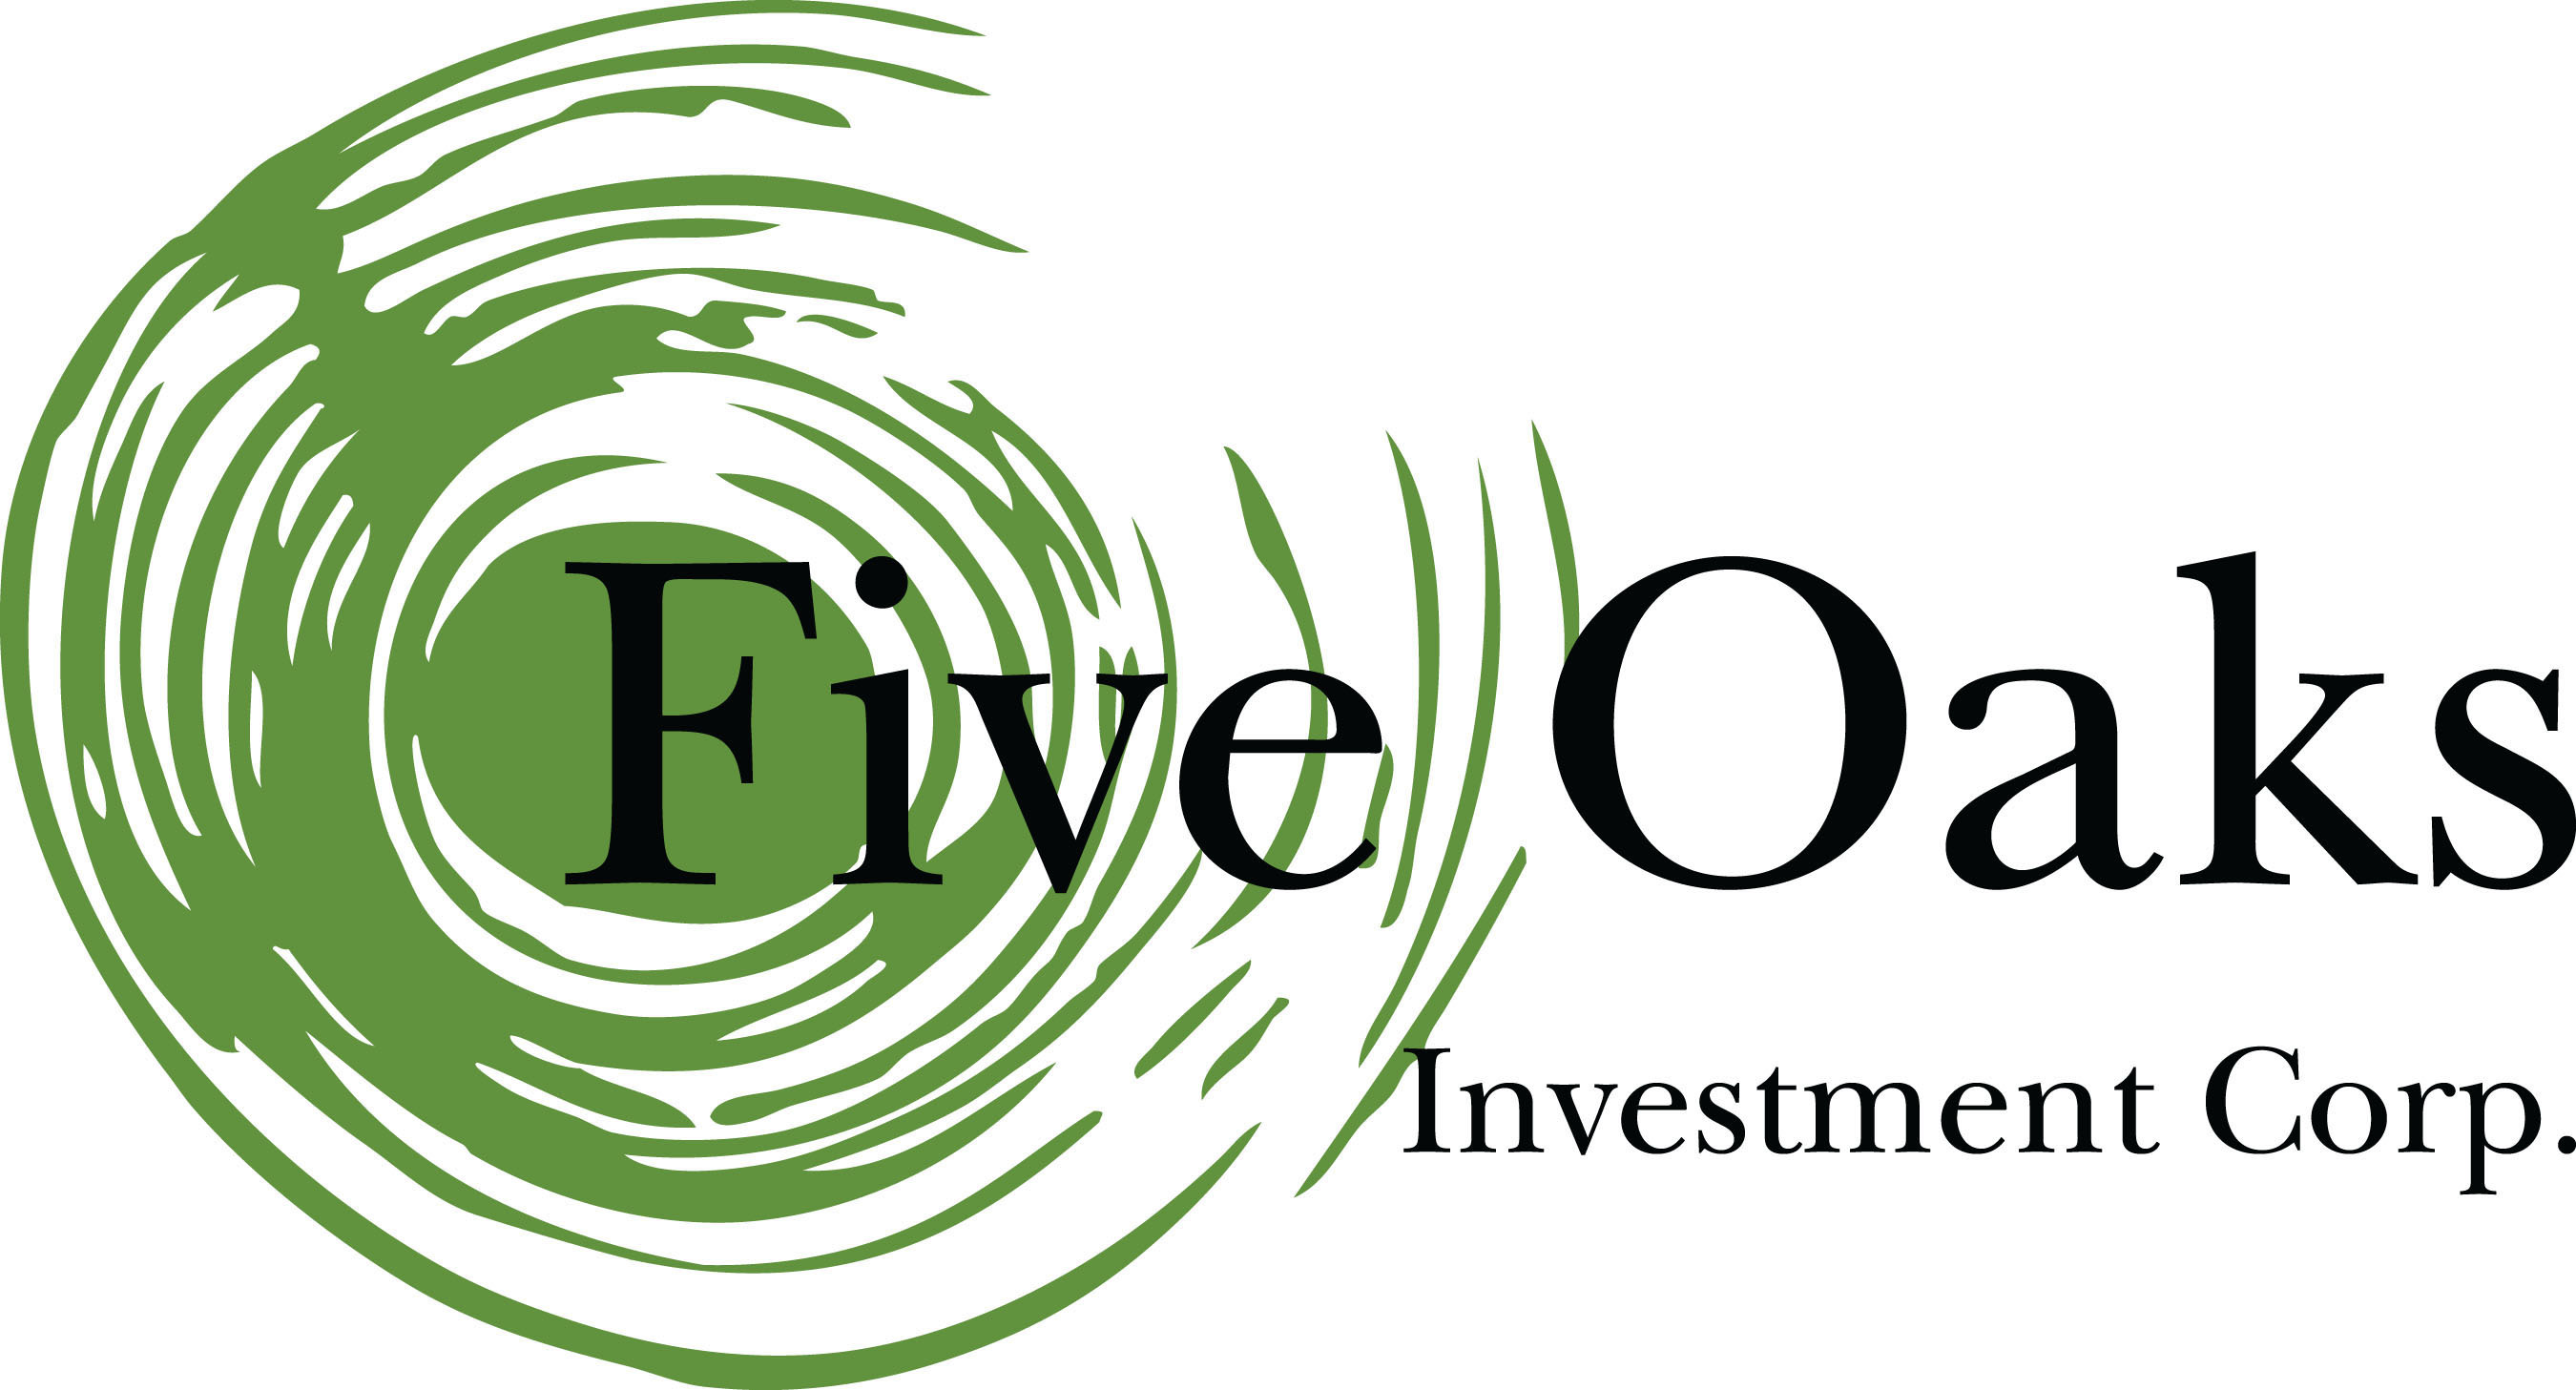 Five Oaks Investment Corp. logo. (PRNewsFoto/Five Oaks Investment Corp.) (PRNewsFoto/)